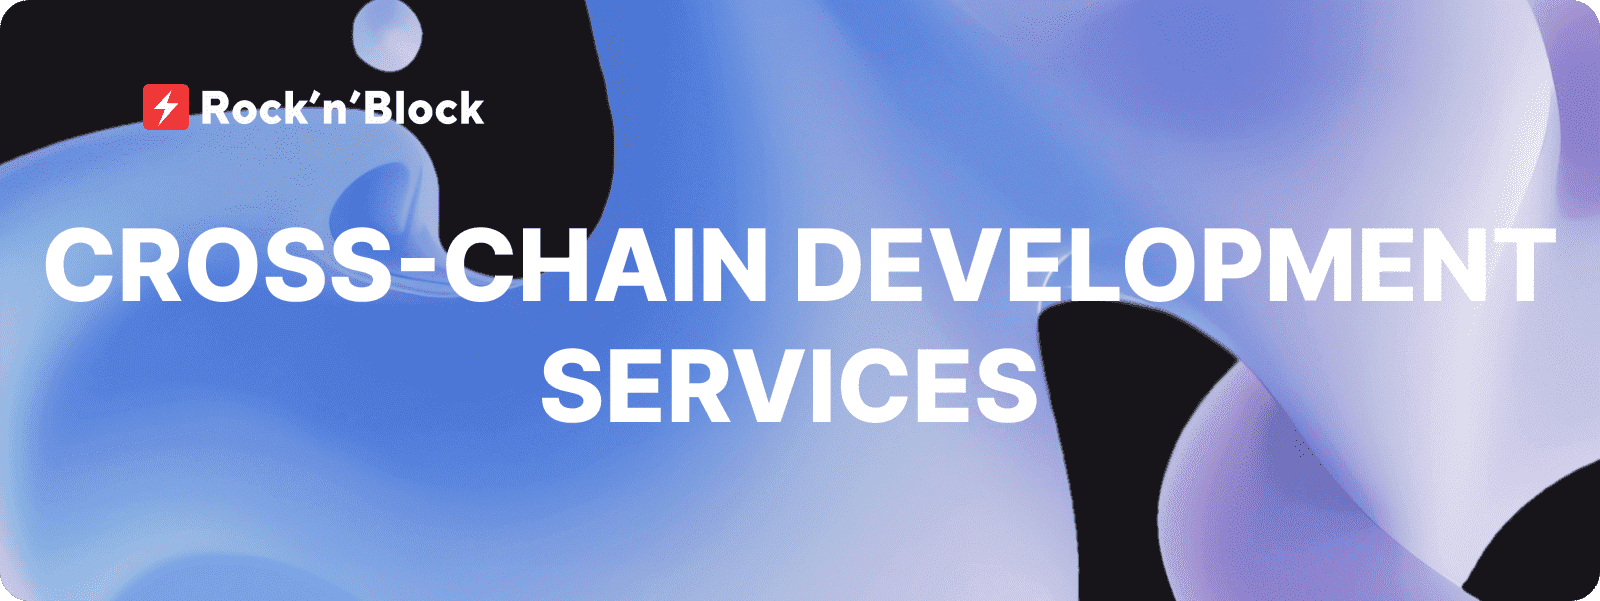 Cross-Chain Development Services 